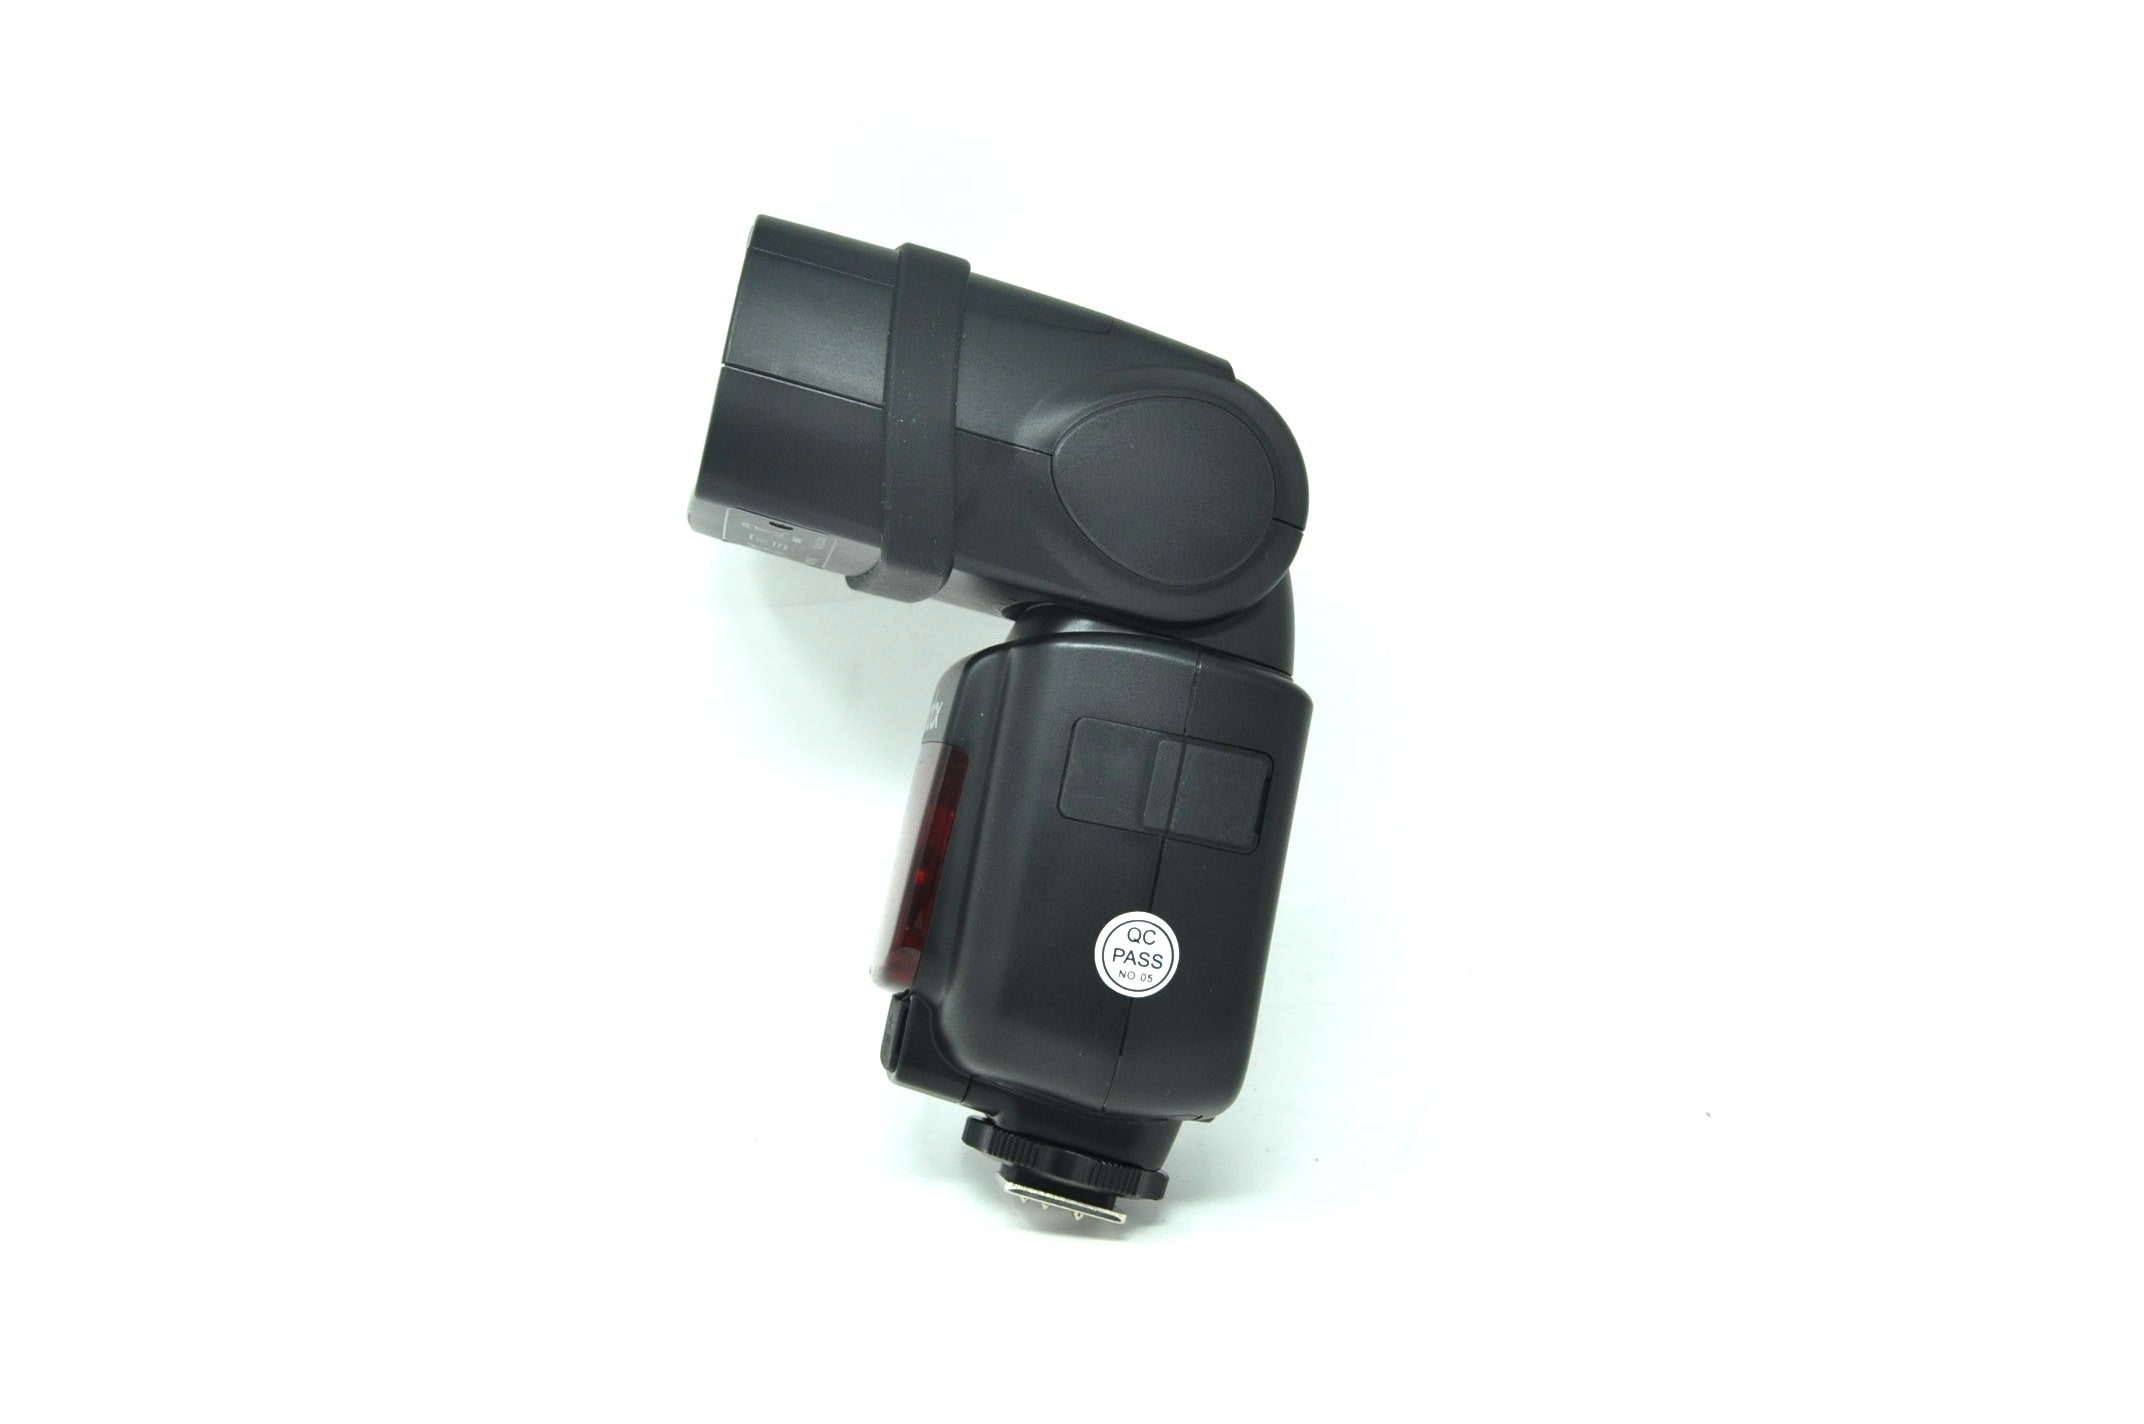 Used Godox TT685N TTL bounce flash for Nikon cameras(SH40095)